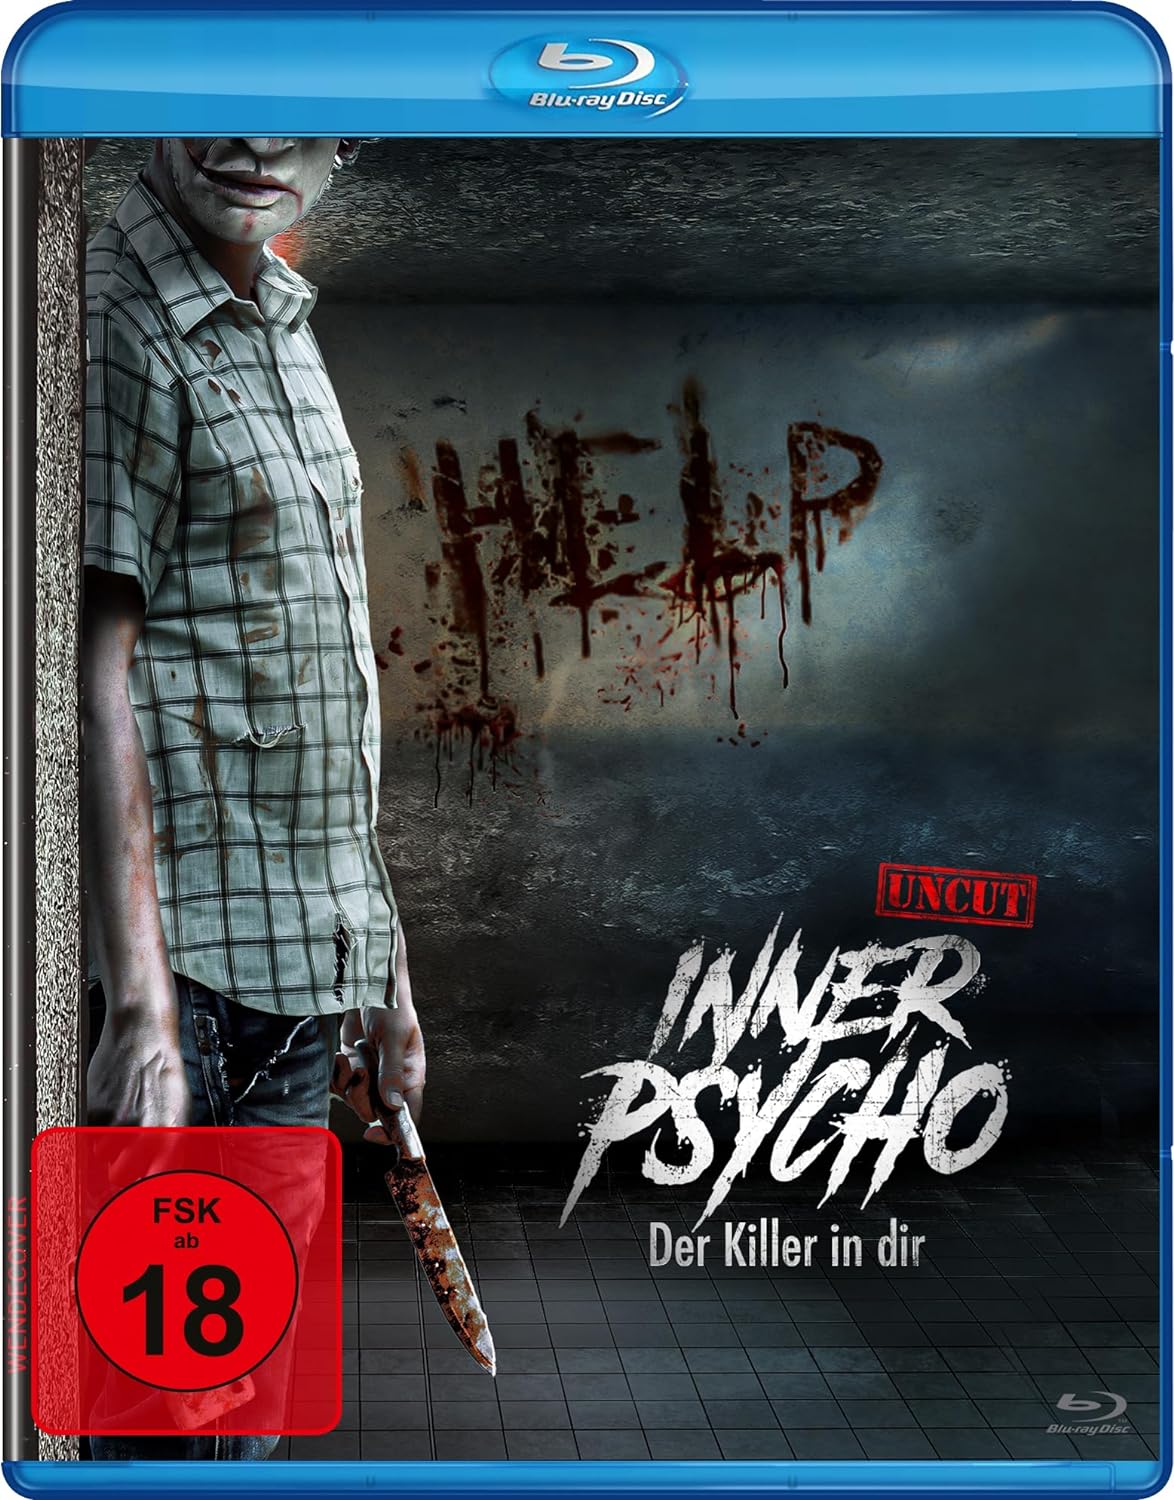 Inner Psycho - Der Killer in dir  (Blu-ray Disc)